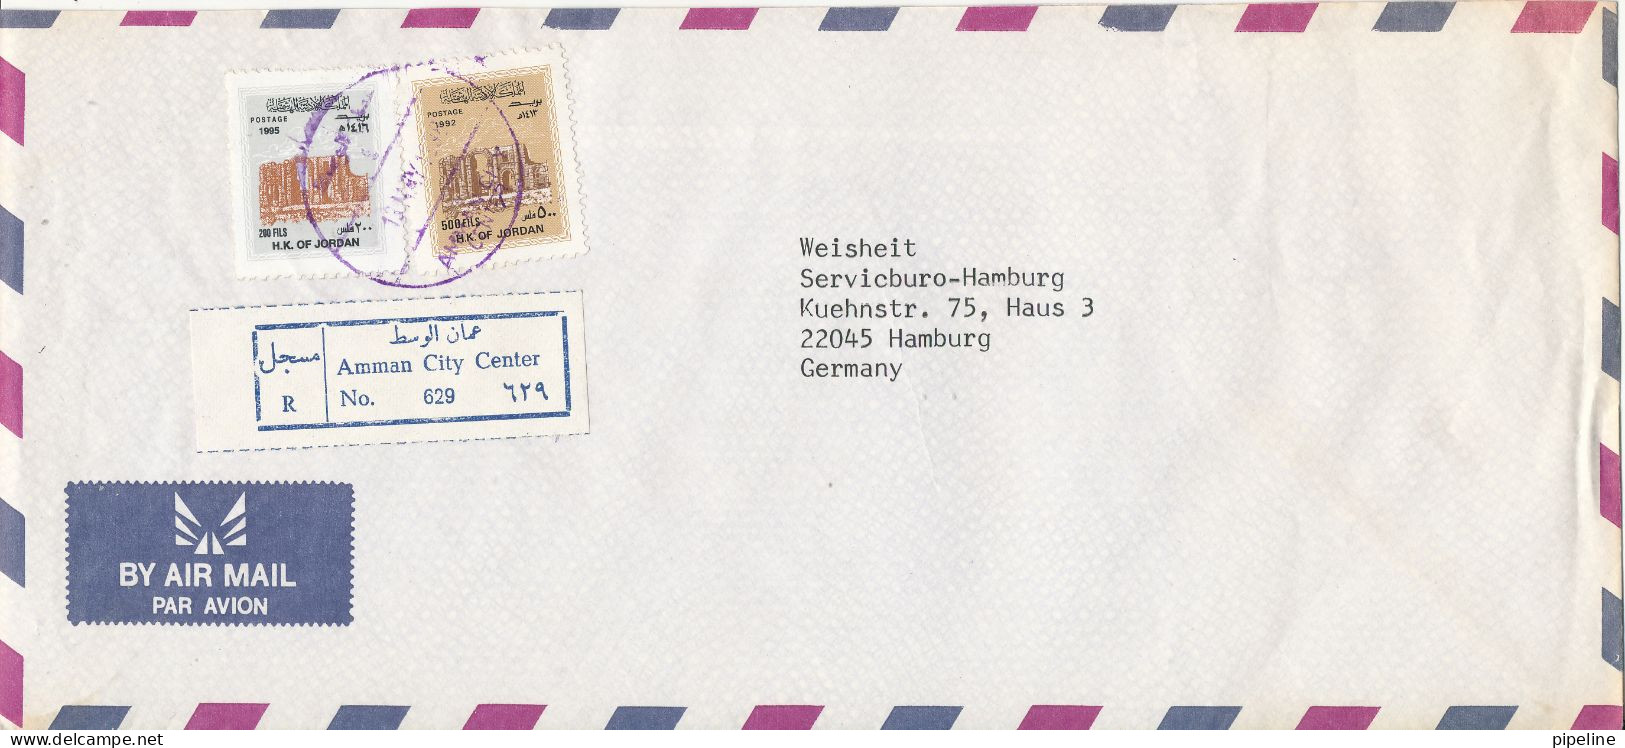 Jordan Registered Air Mail Cover Sent To Germany 13-5-1996 - Jordanie